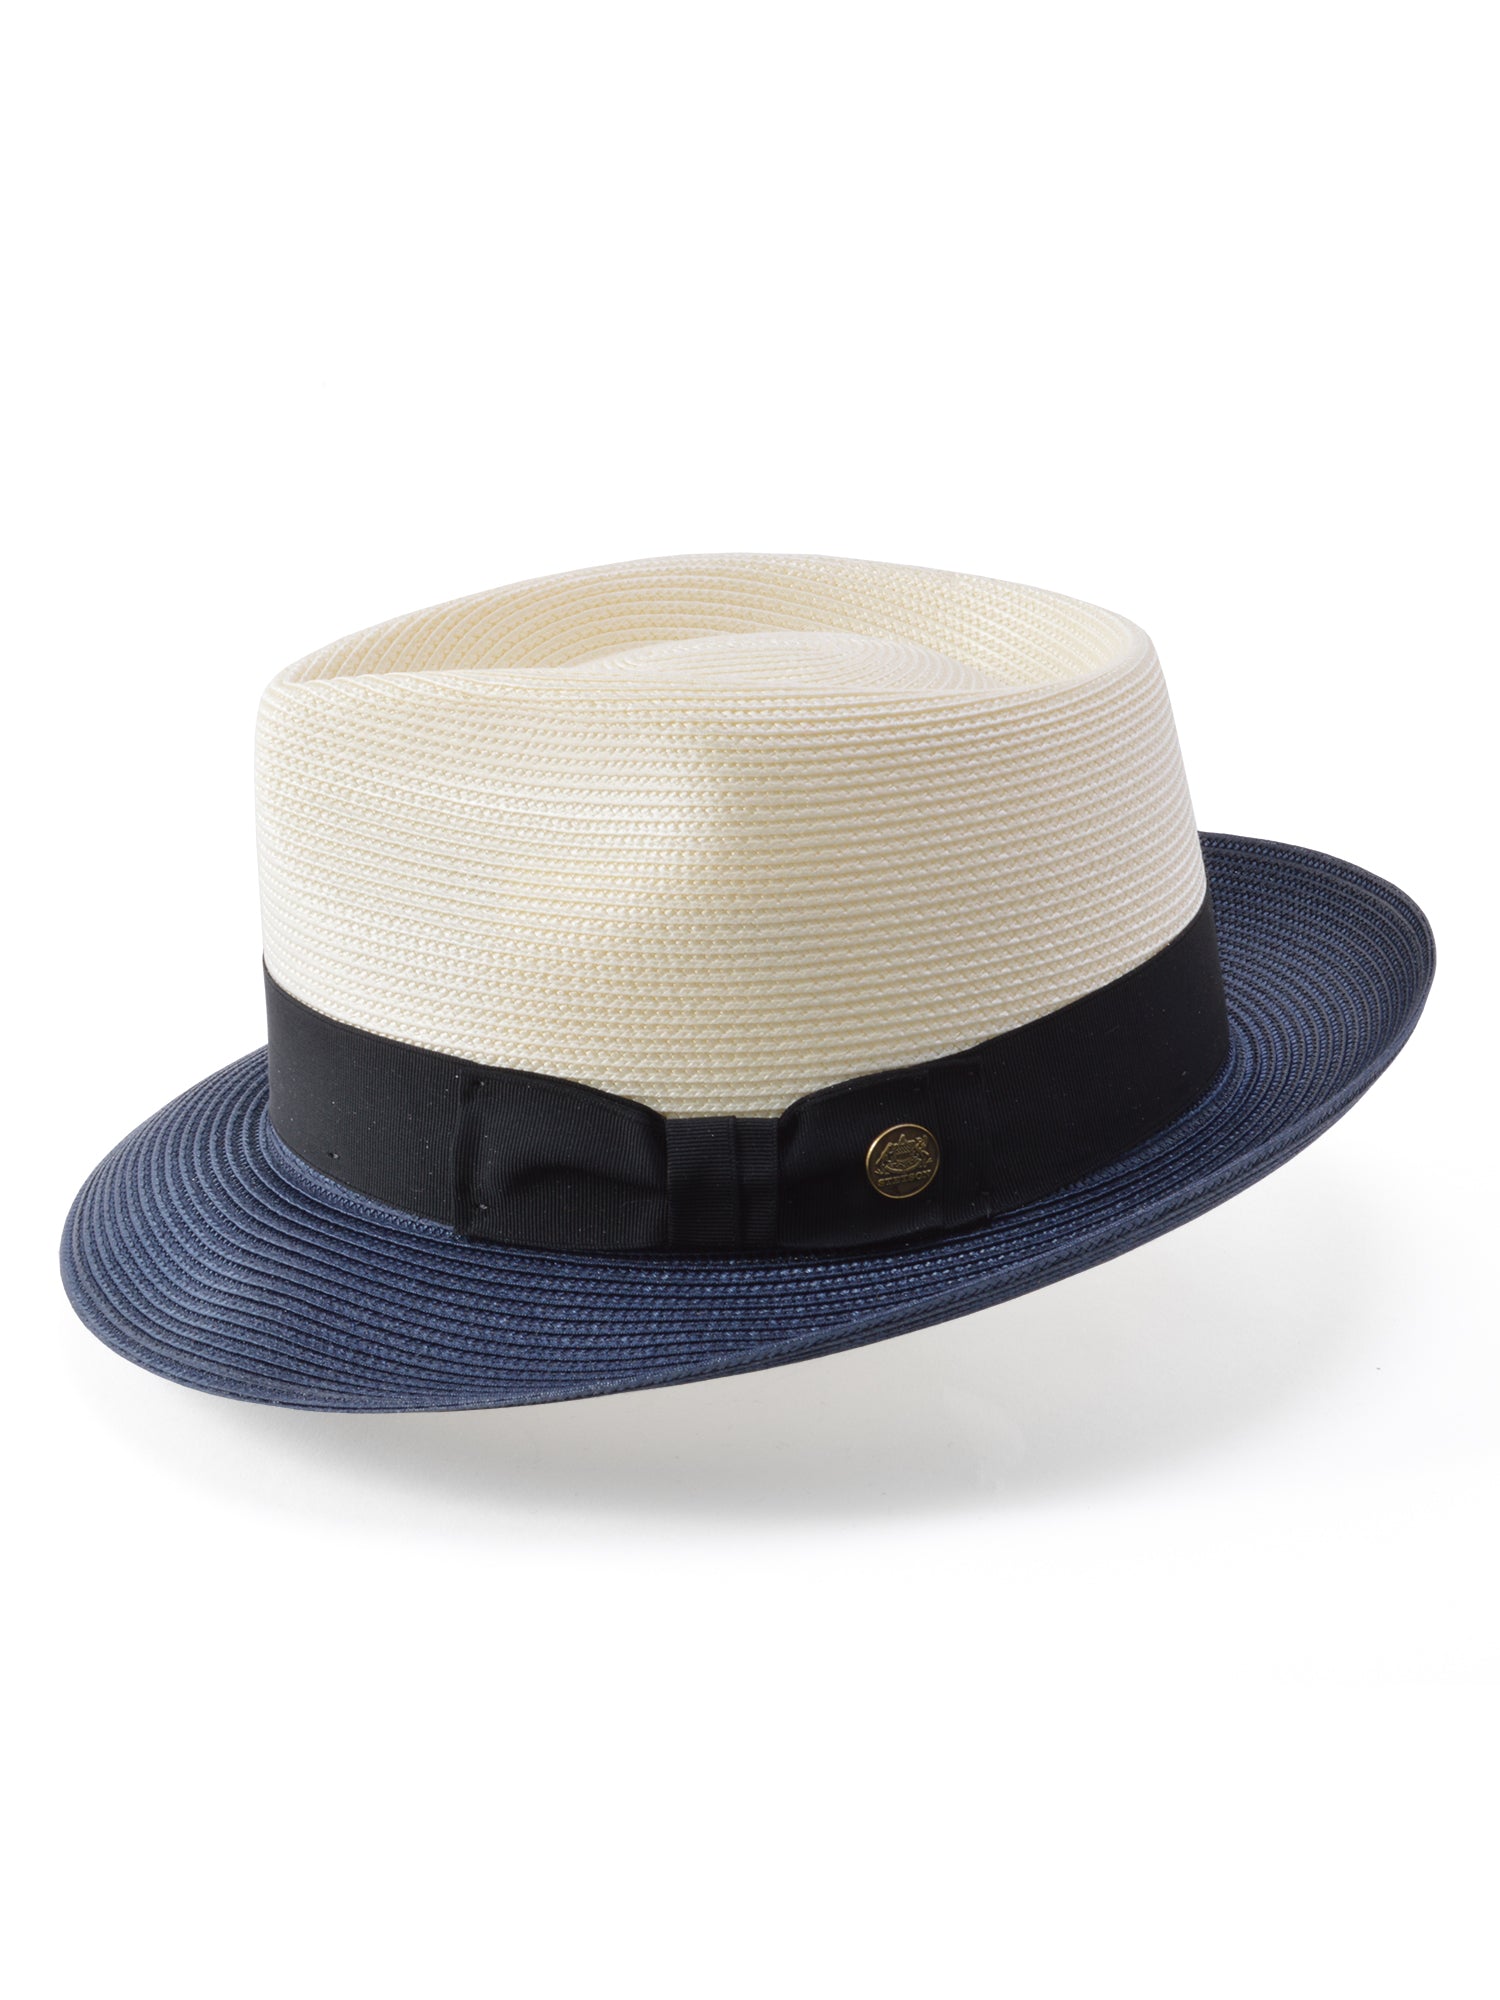 Stetson Dutoni Straw Hat in Ivory / Navy - 0